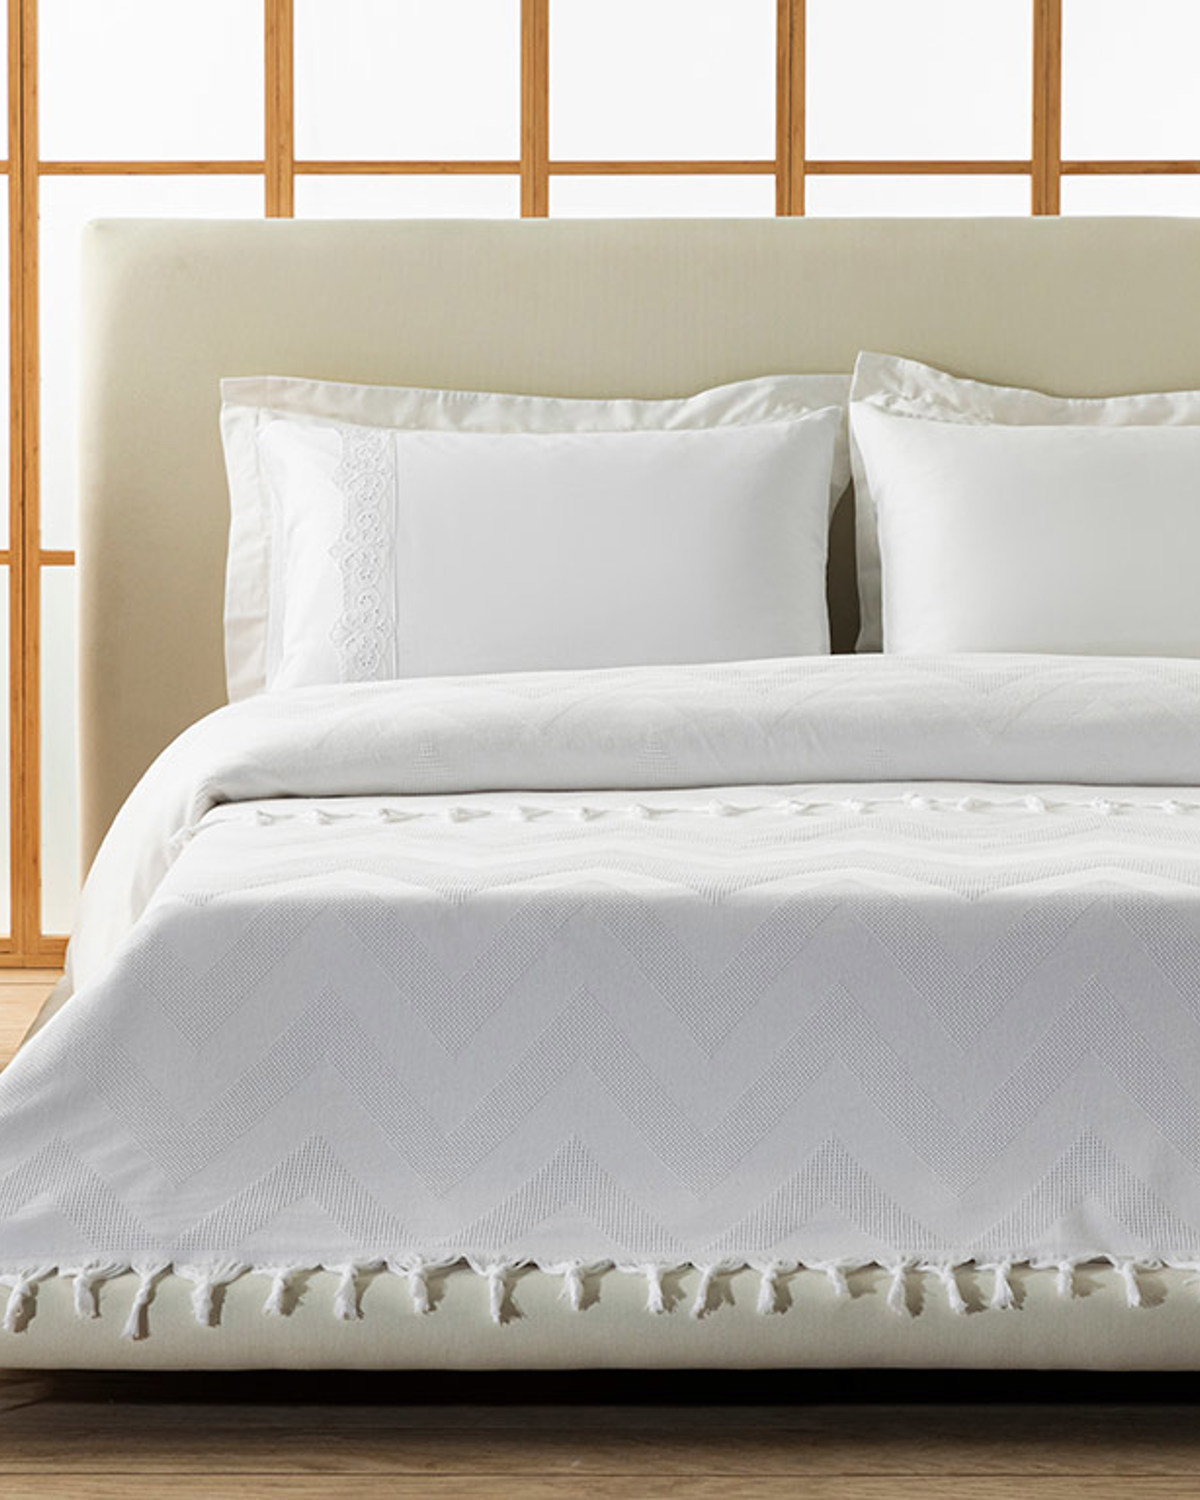 Leona Cotton Jacquard King Size Summer Blanket 220x240 Cm White